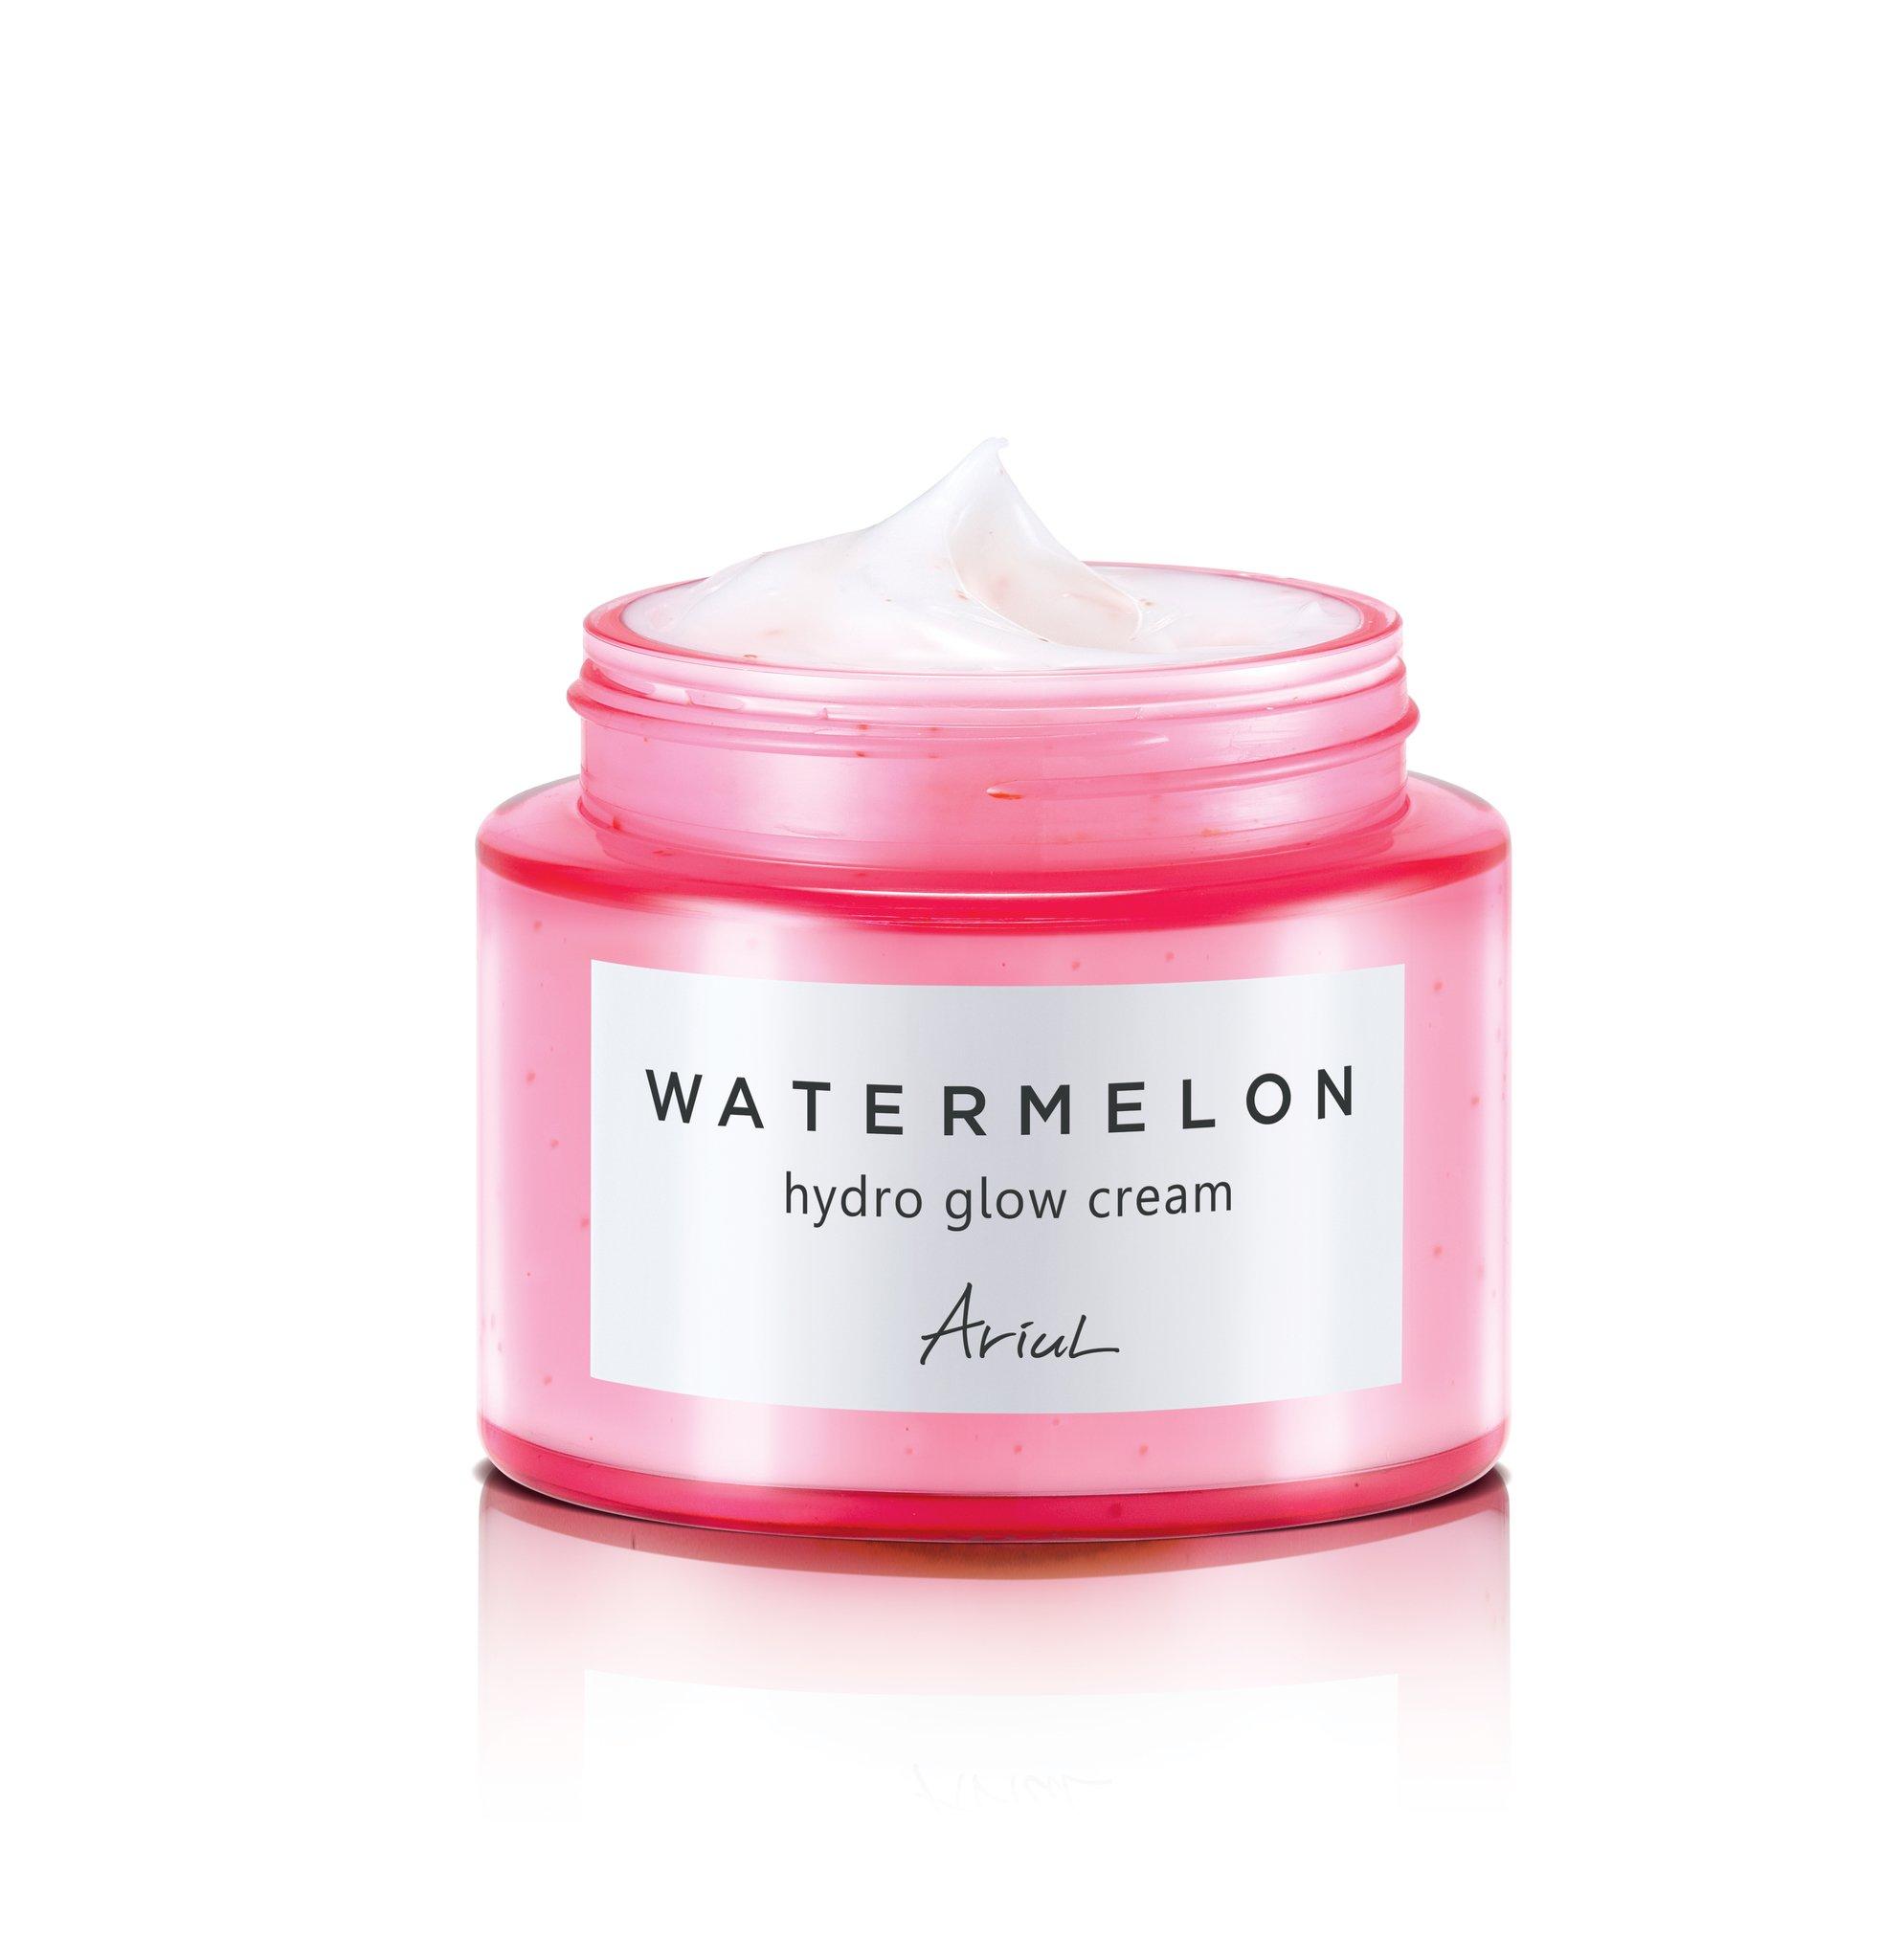 Watermelon Hydro Glow Cream